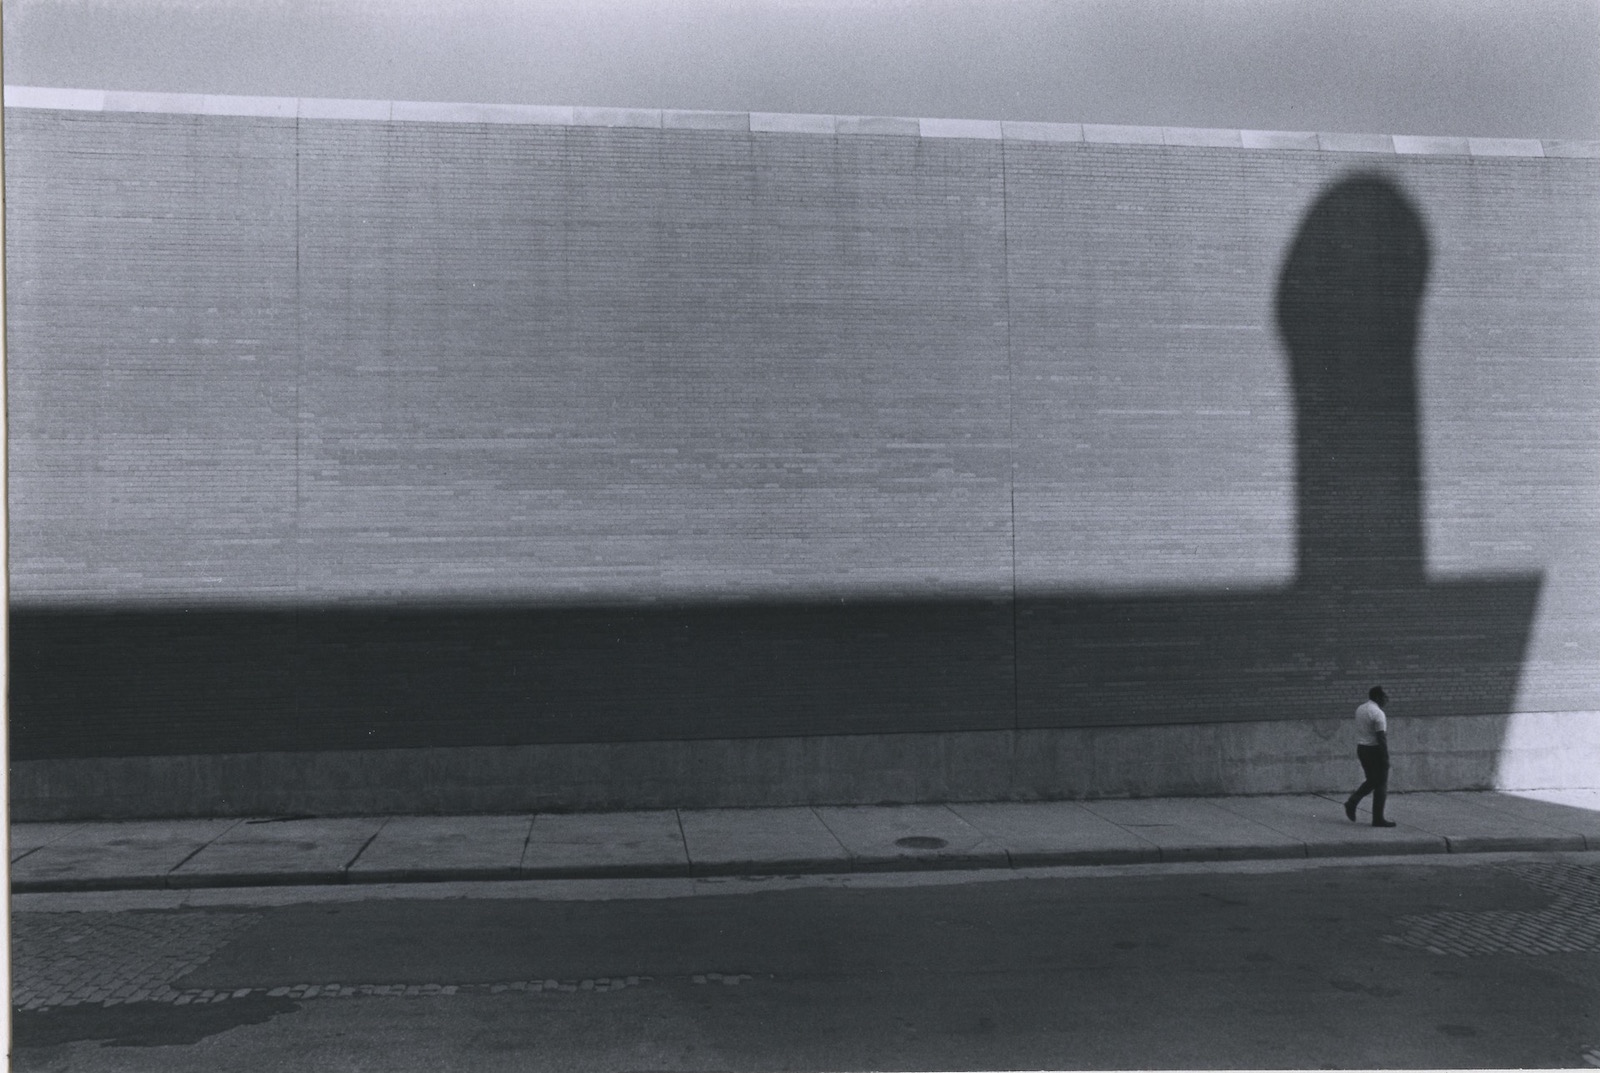 Man in Shadow, St Paul, Minnesota, 1970